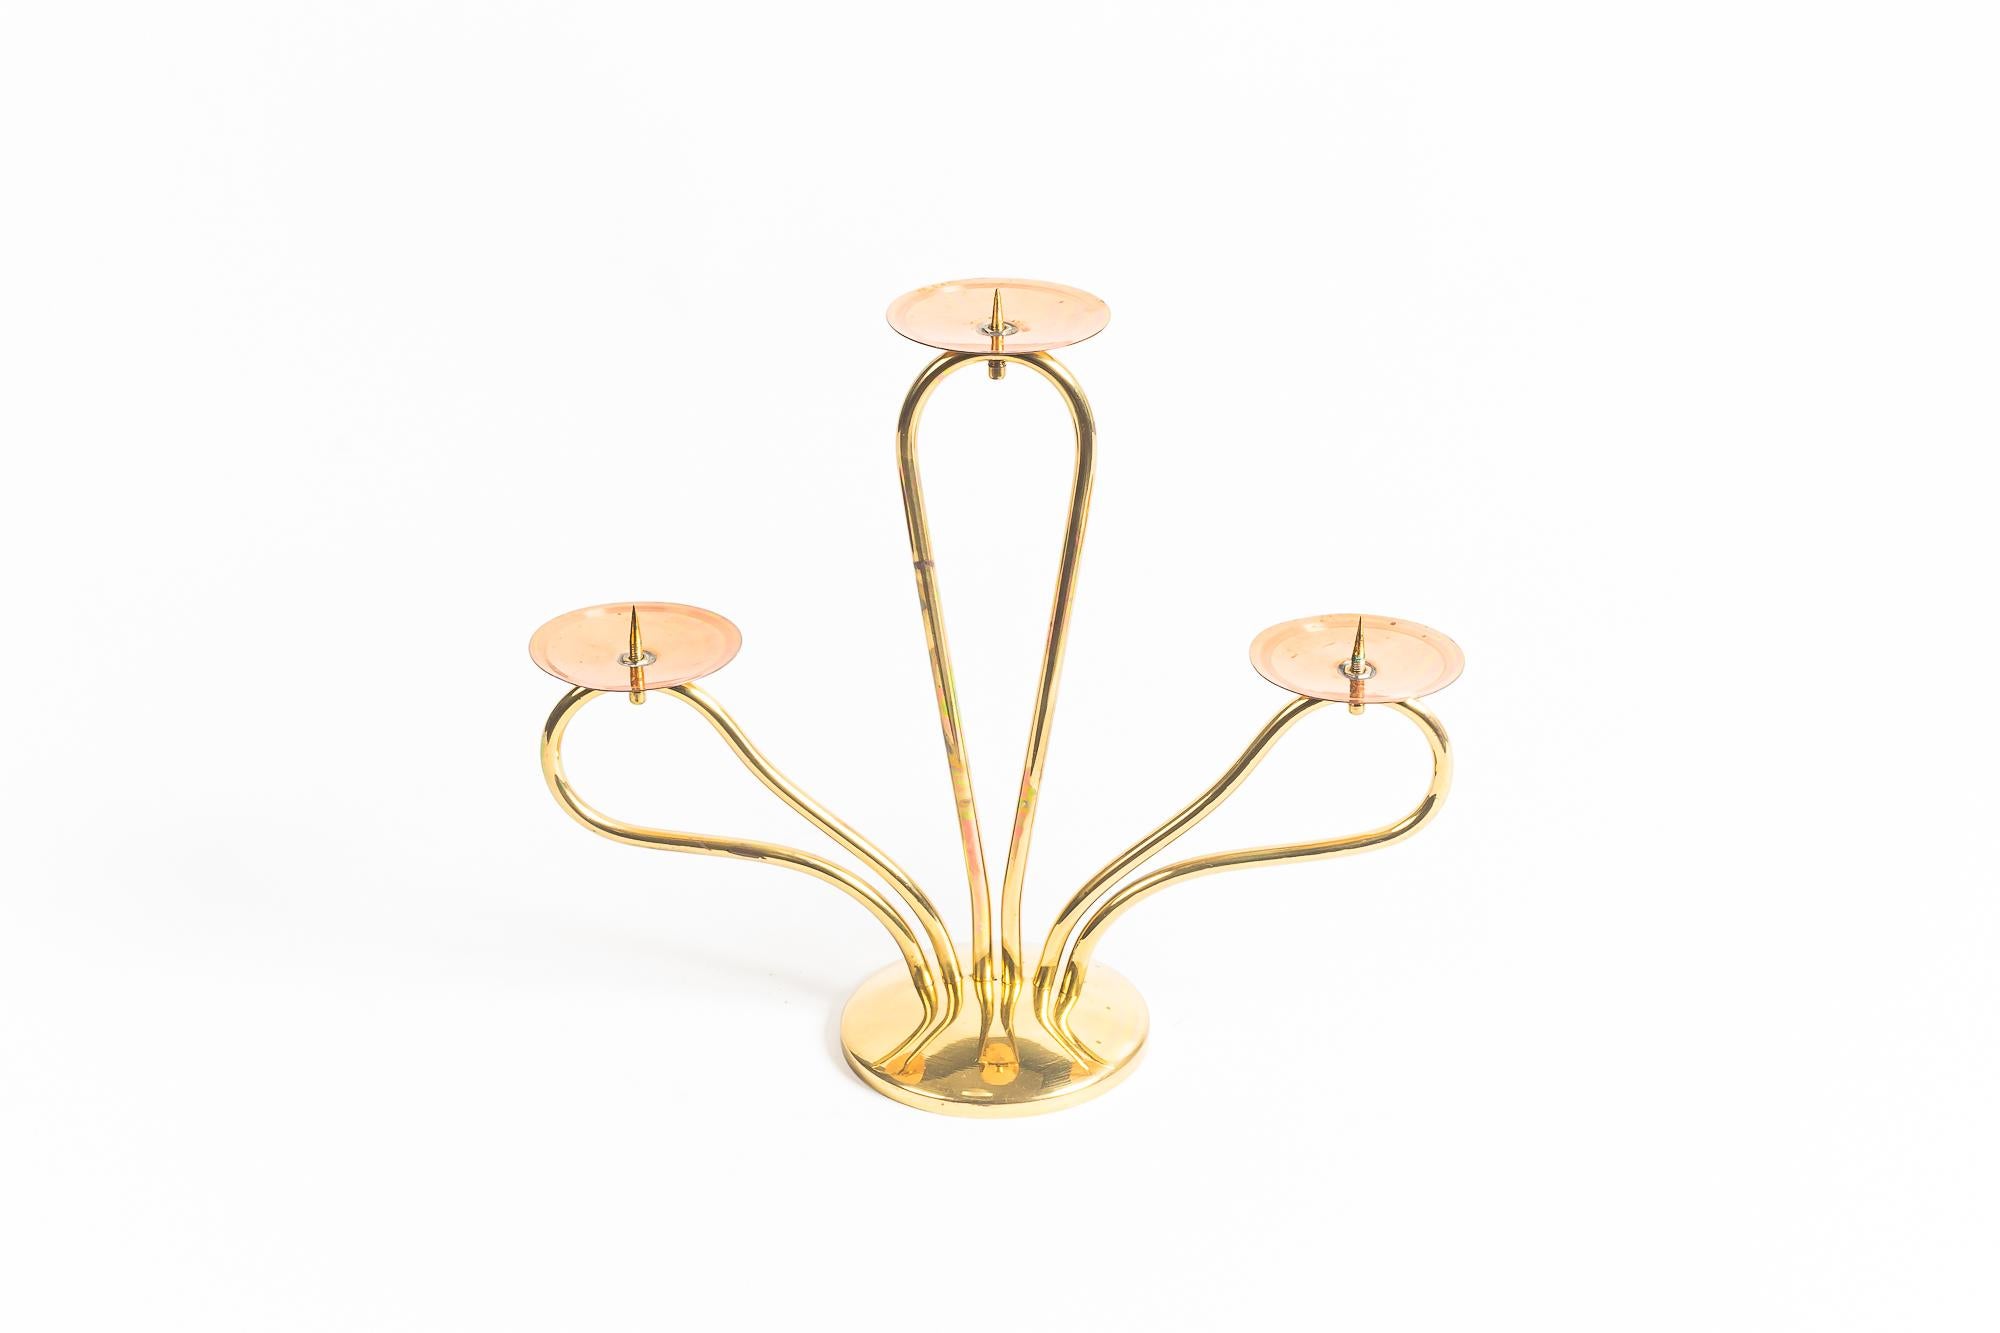 Candle holder Vienna brass and copper combination around 1960s 
Original condition.